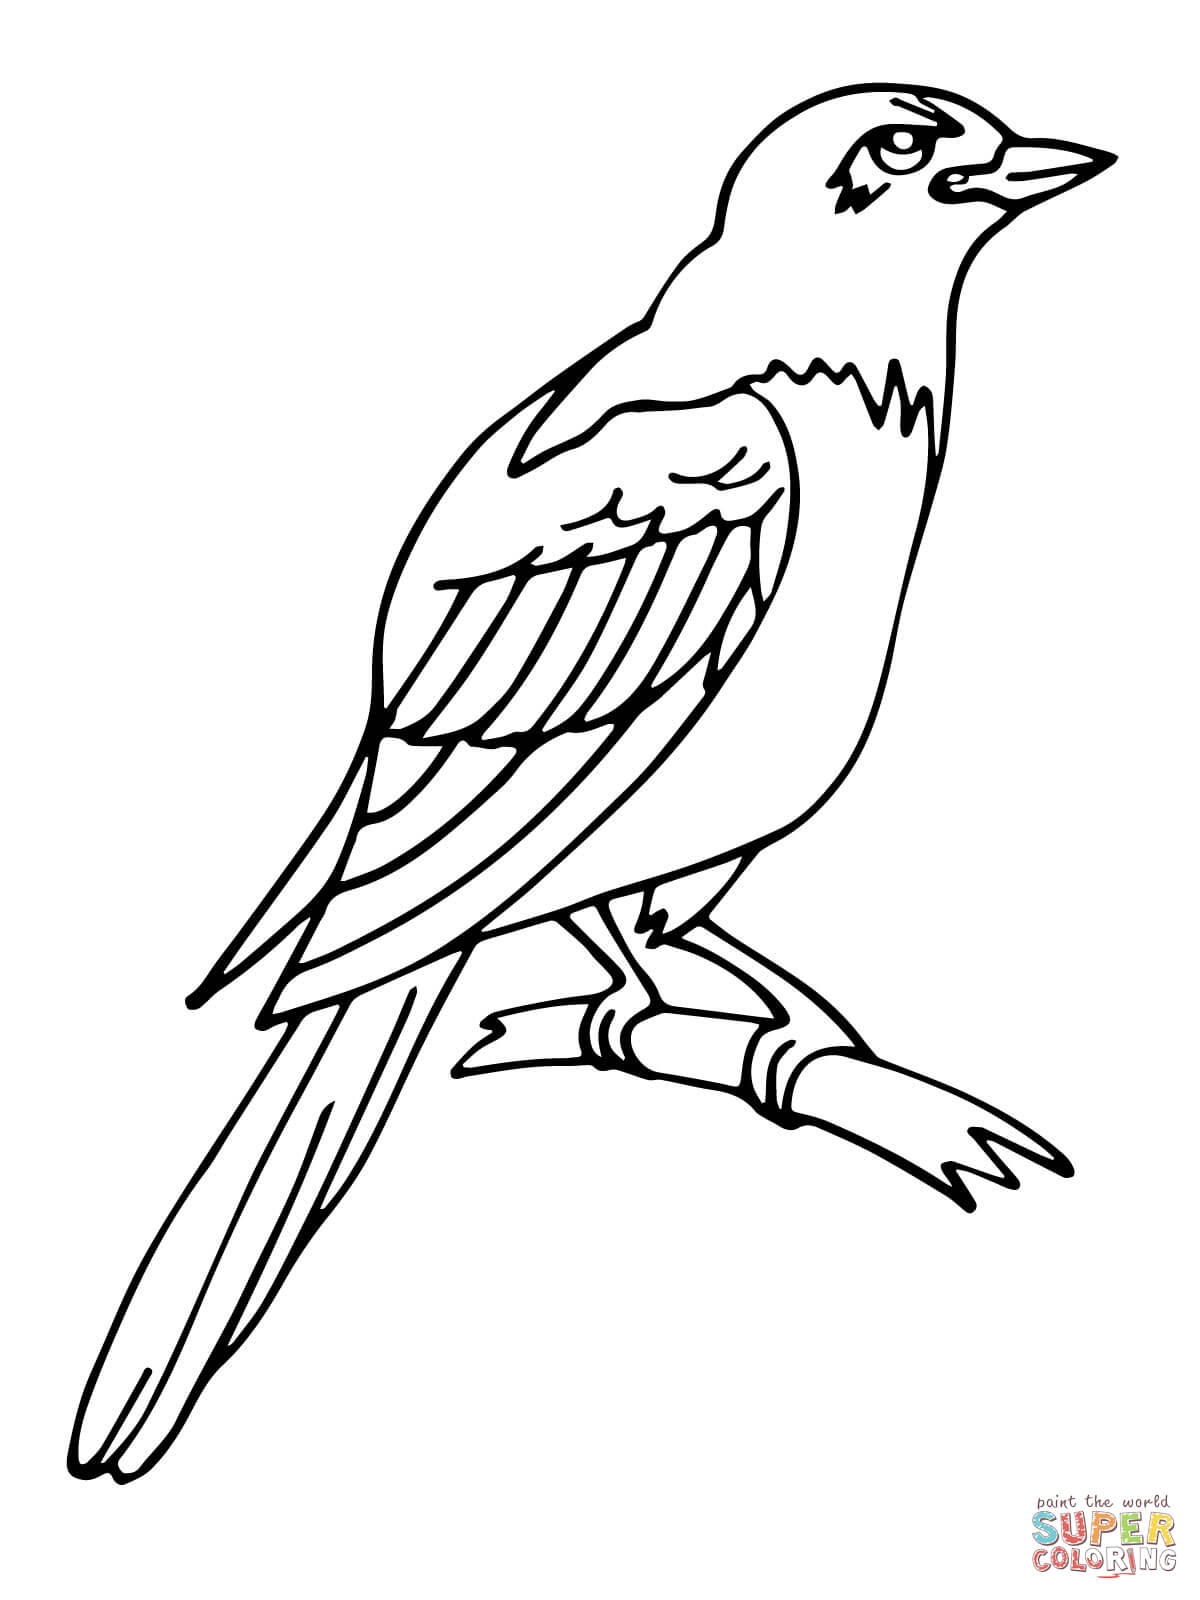 Contoh Gambar Mewarnai Binatang Burung KataUcap